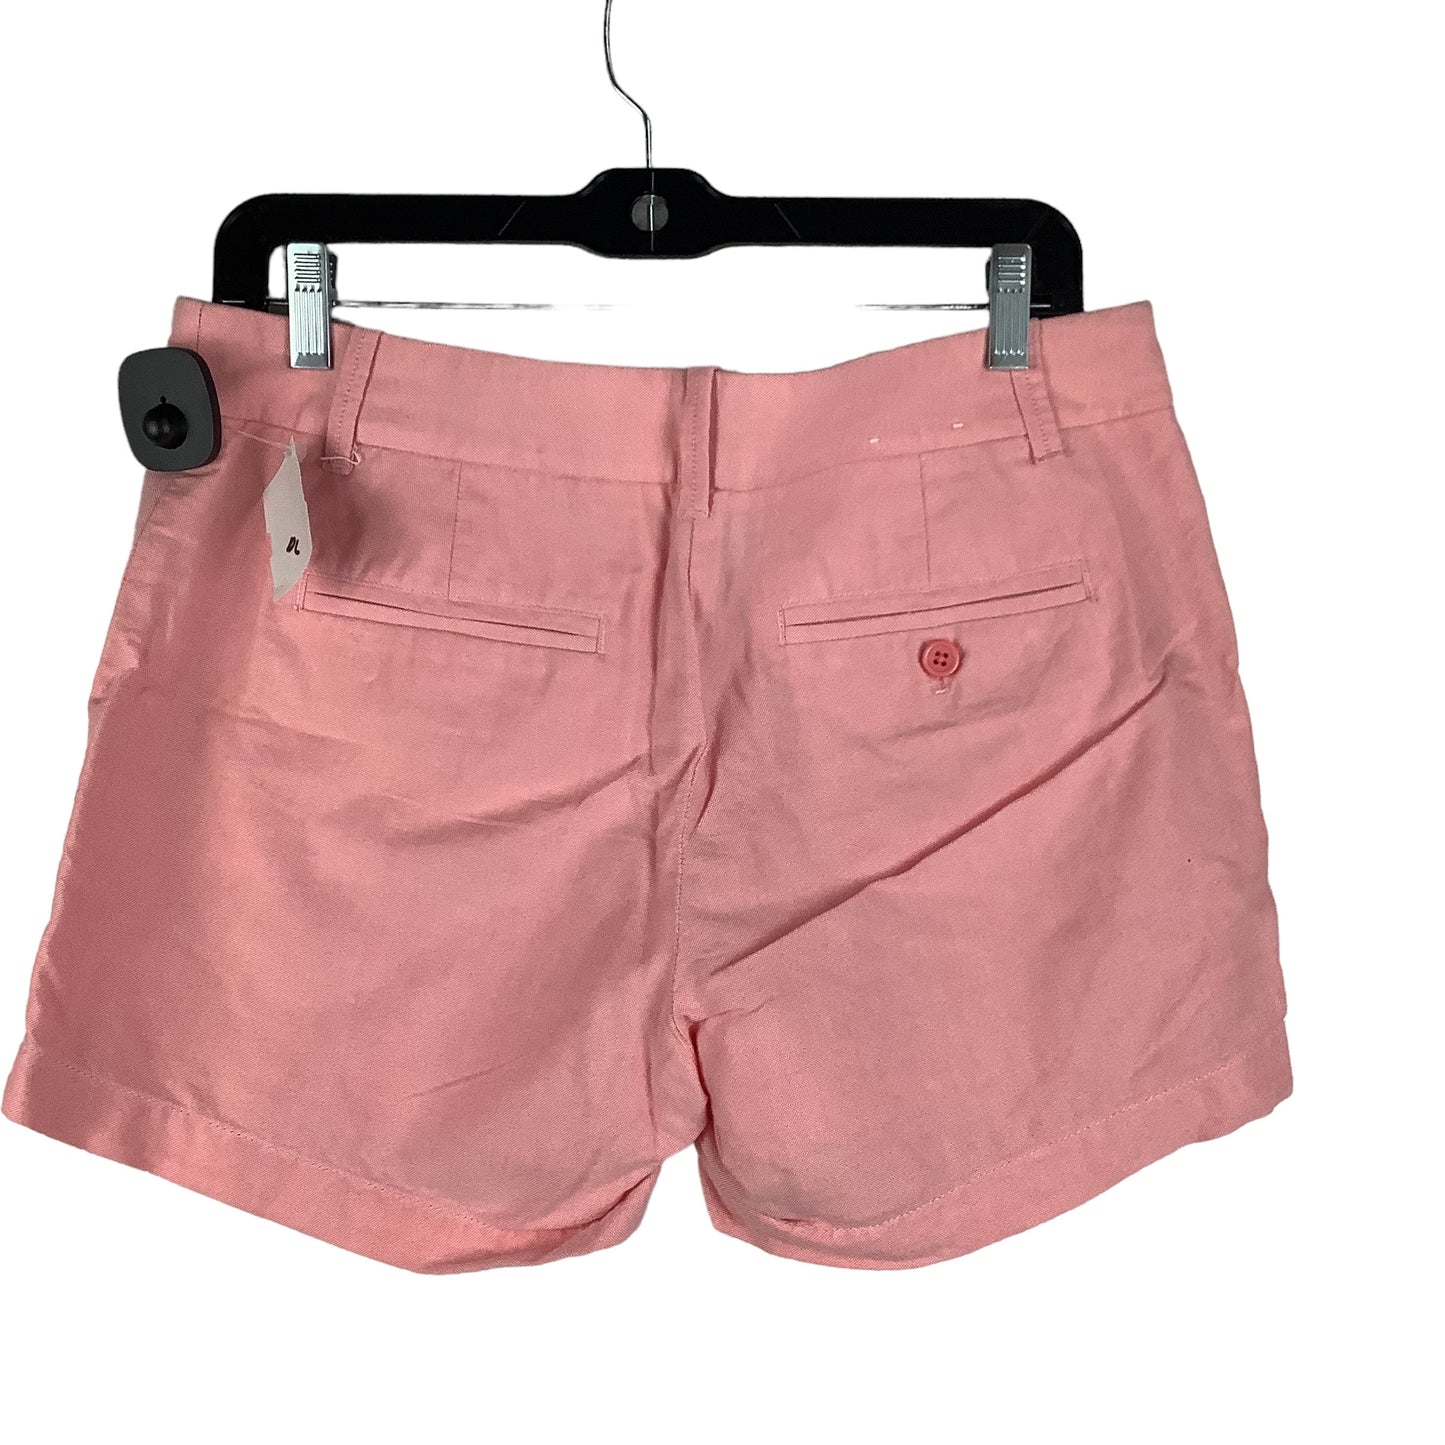 Pink Shorts J. Crew, Size 6